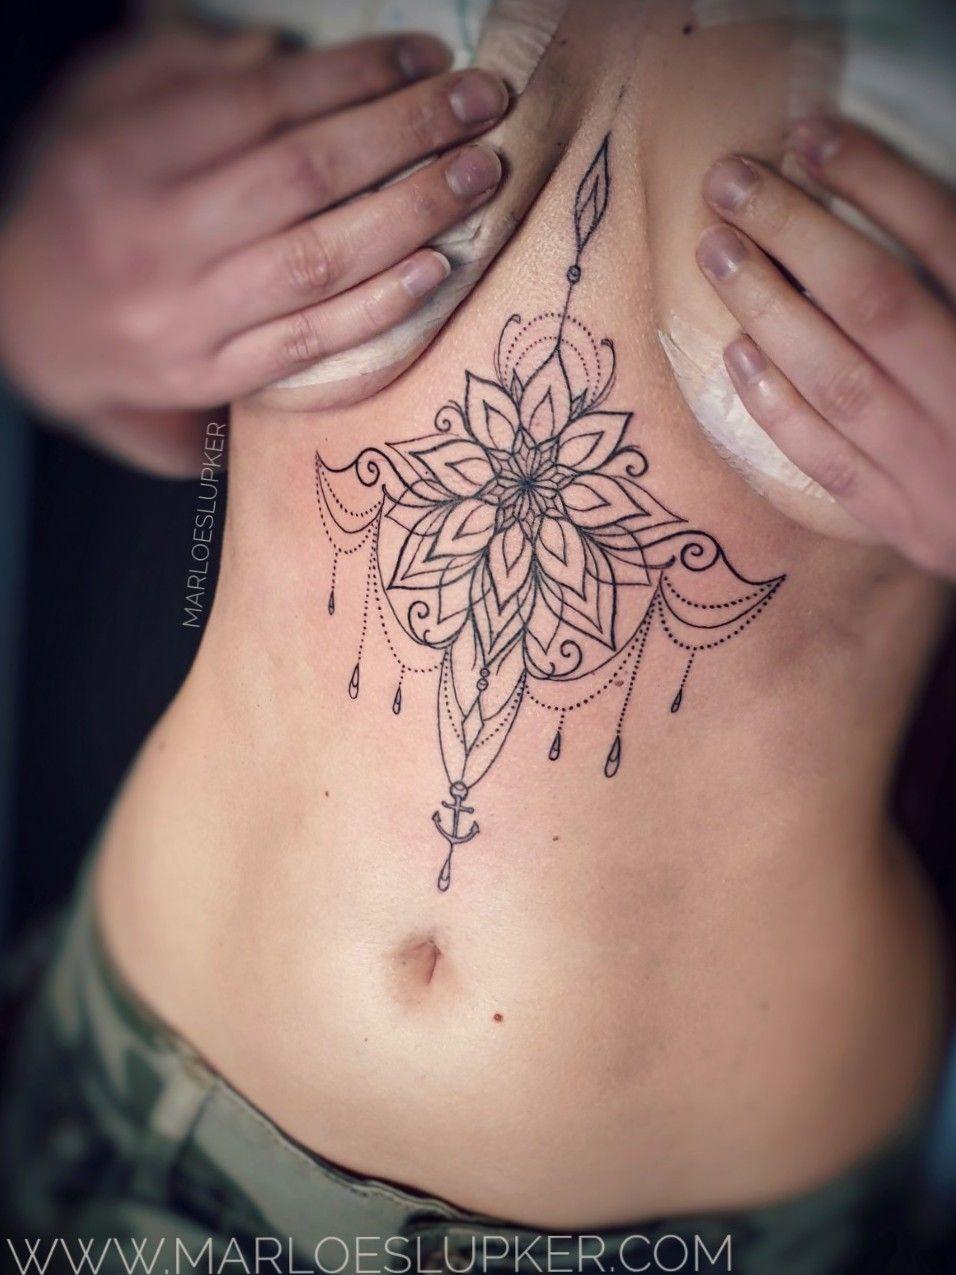 Underboob mandala tattoo by SelfmadeTattooBerlin on DeviantArt